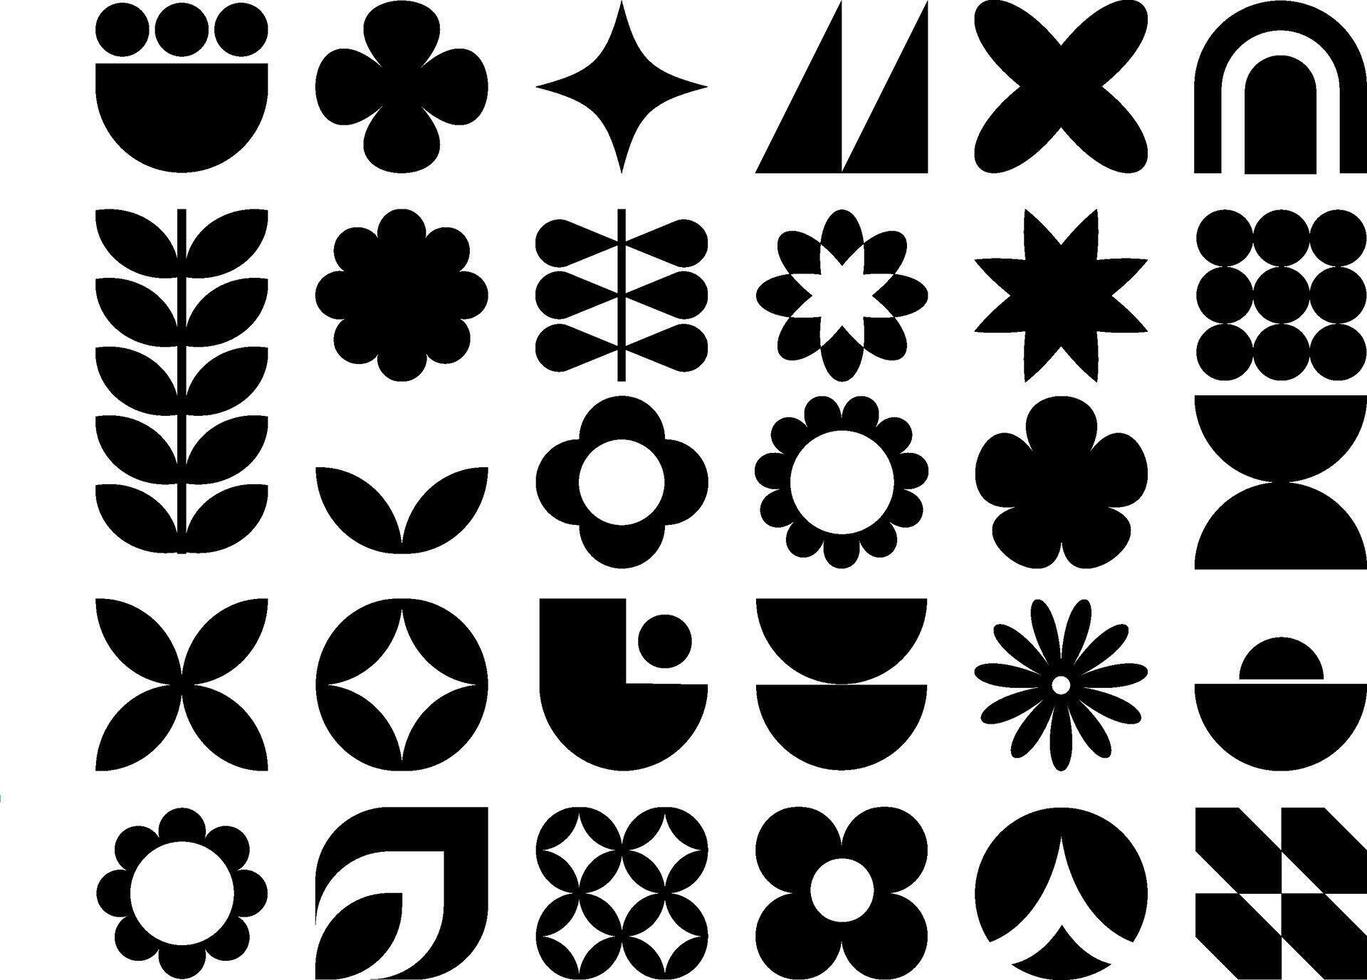 Vector set of black brutalist bauhaus geometric shapes. Trendy abstract minimalist figures, stars, flowers, circles. Modern design elements